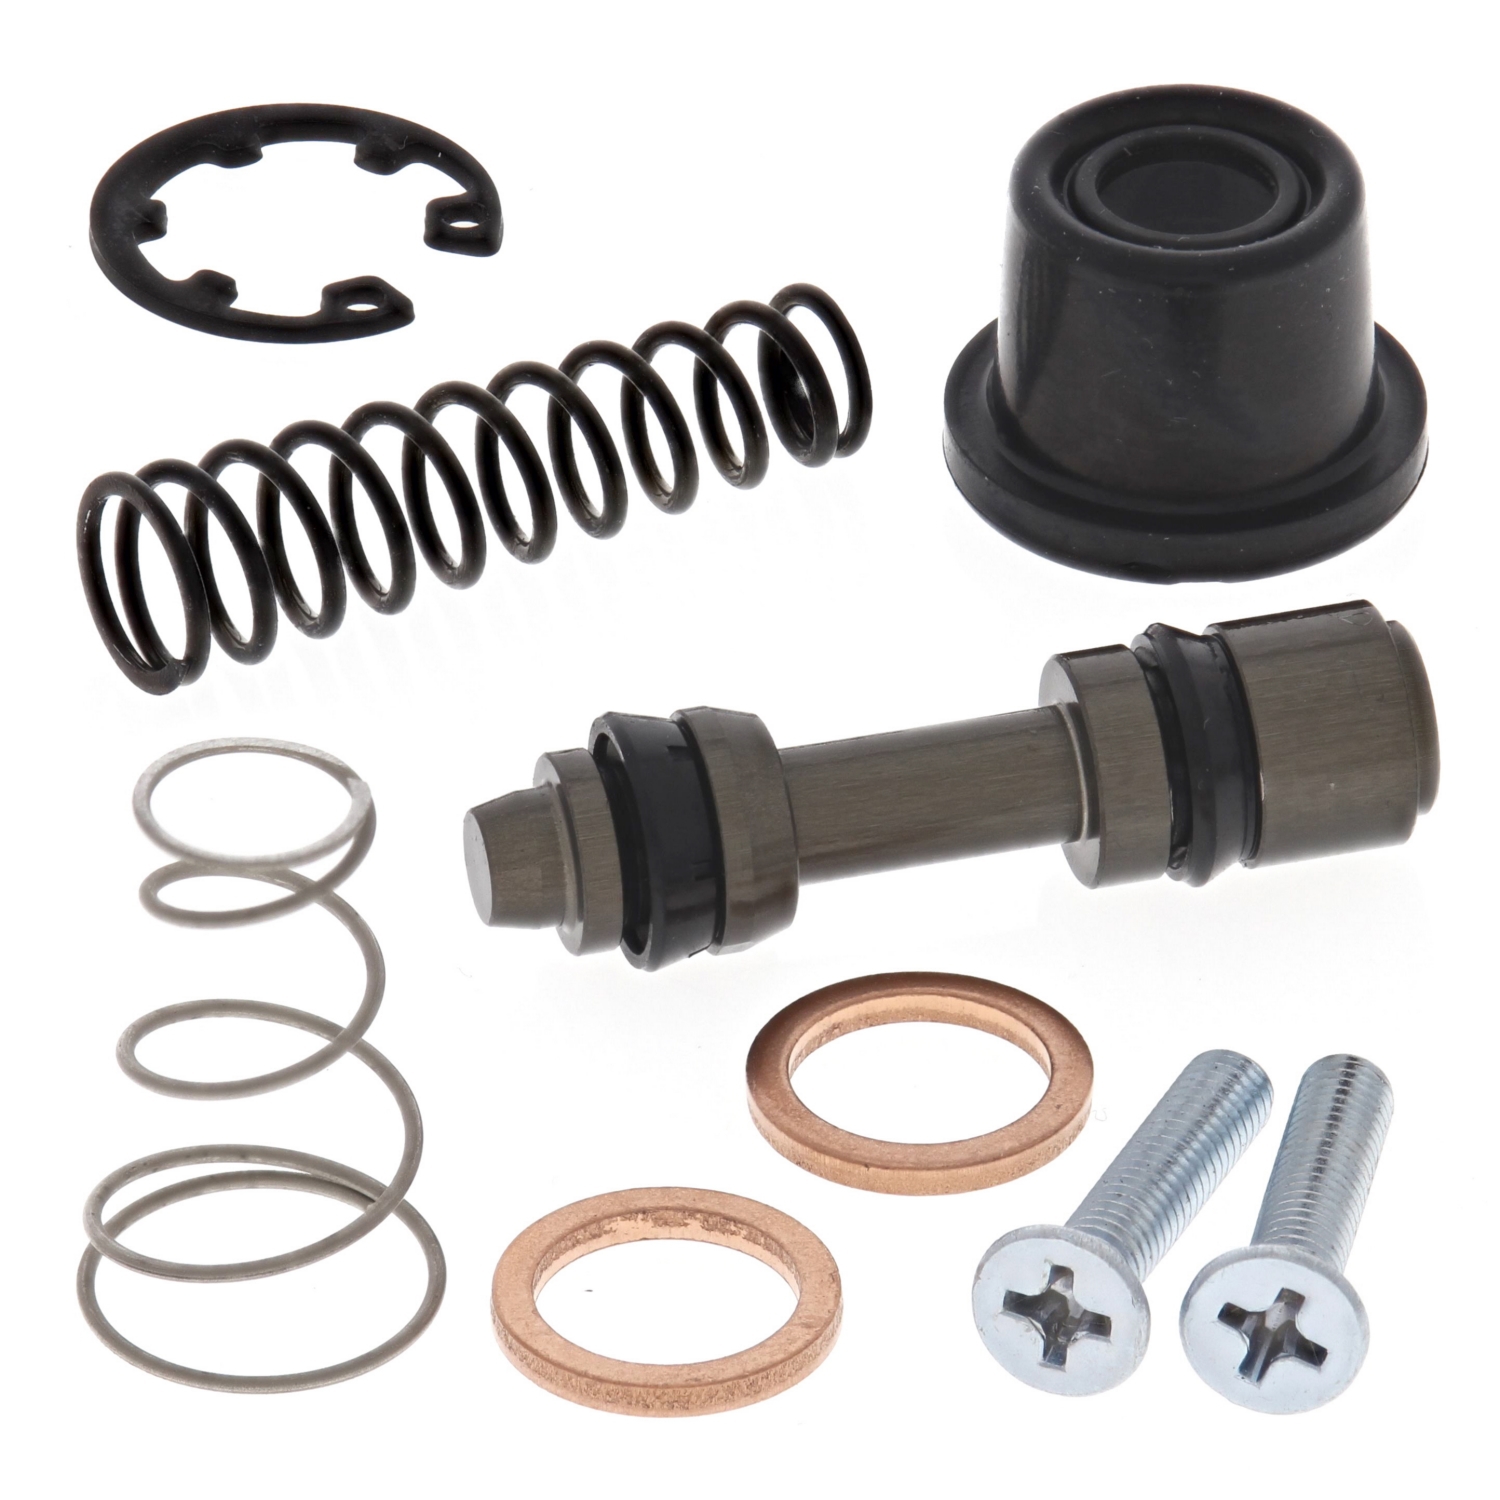 DP 0107-033 Front Brake Master Cylinder Rebuild Repair Parts Kit Compatible with Suzuki 